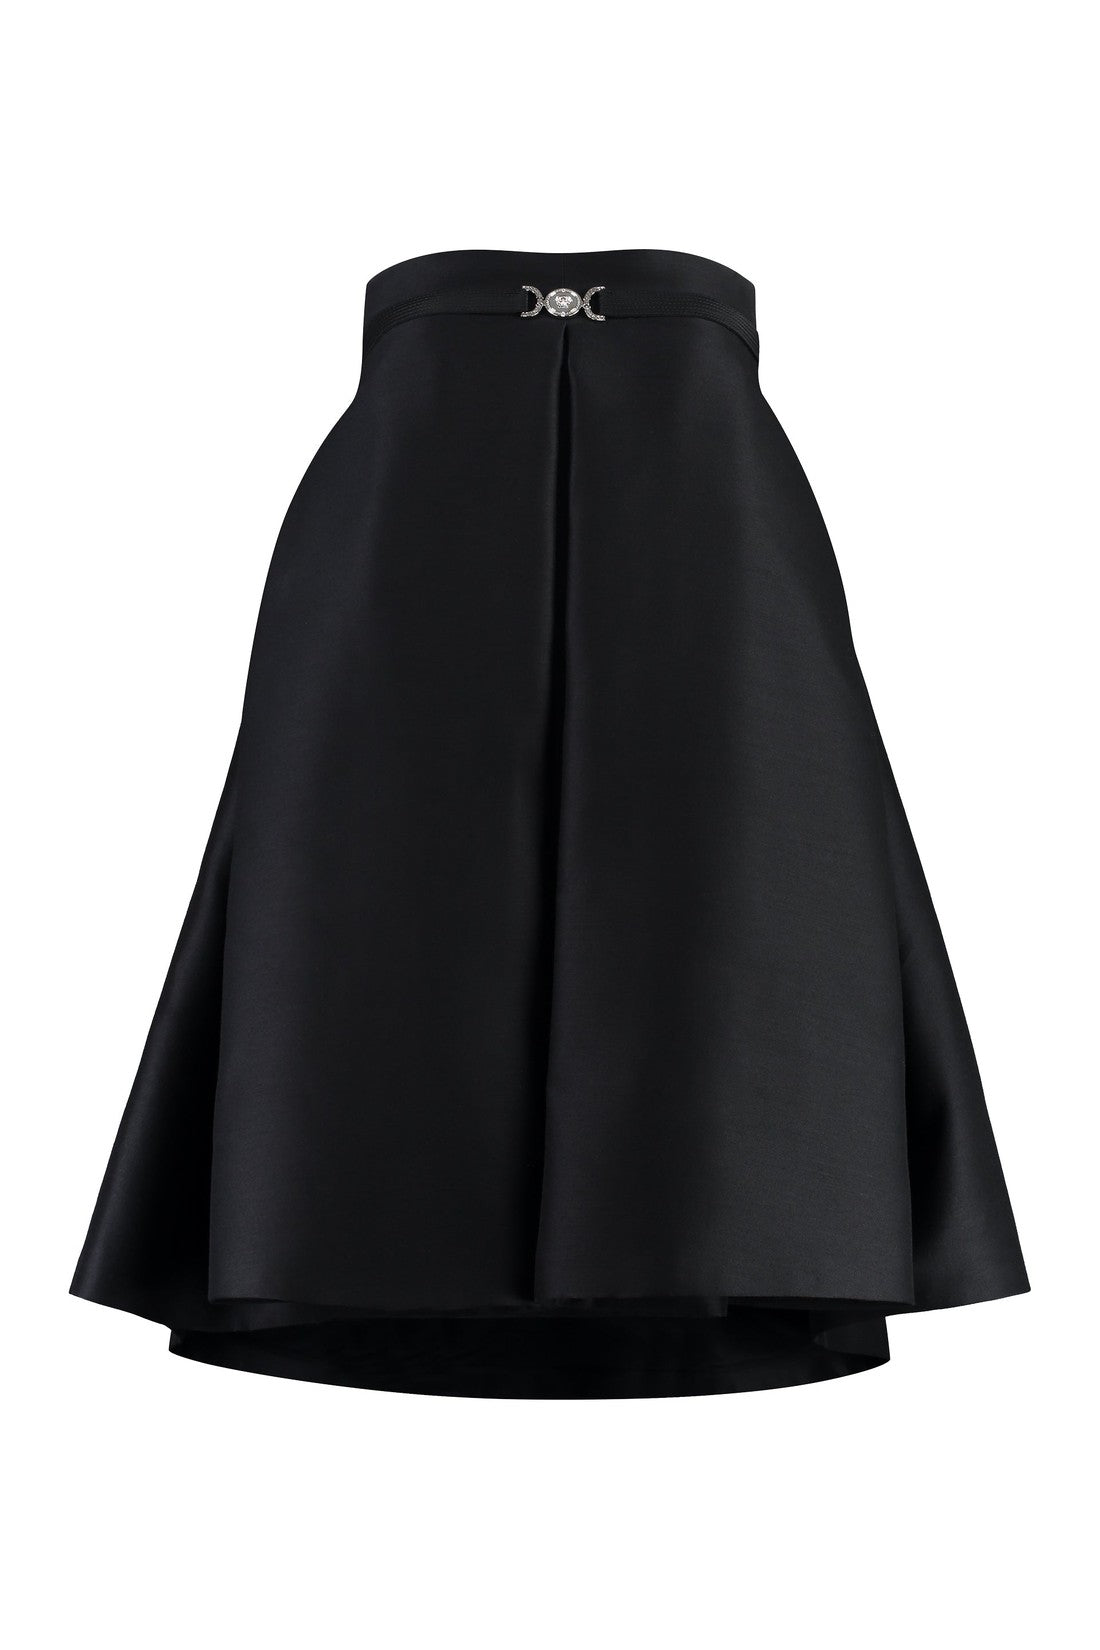 Versace-OUTLET-SALE-Sleeveless dress-ARCHIVIST